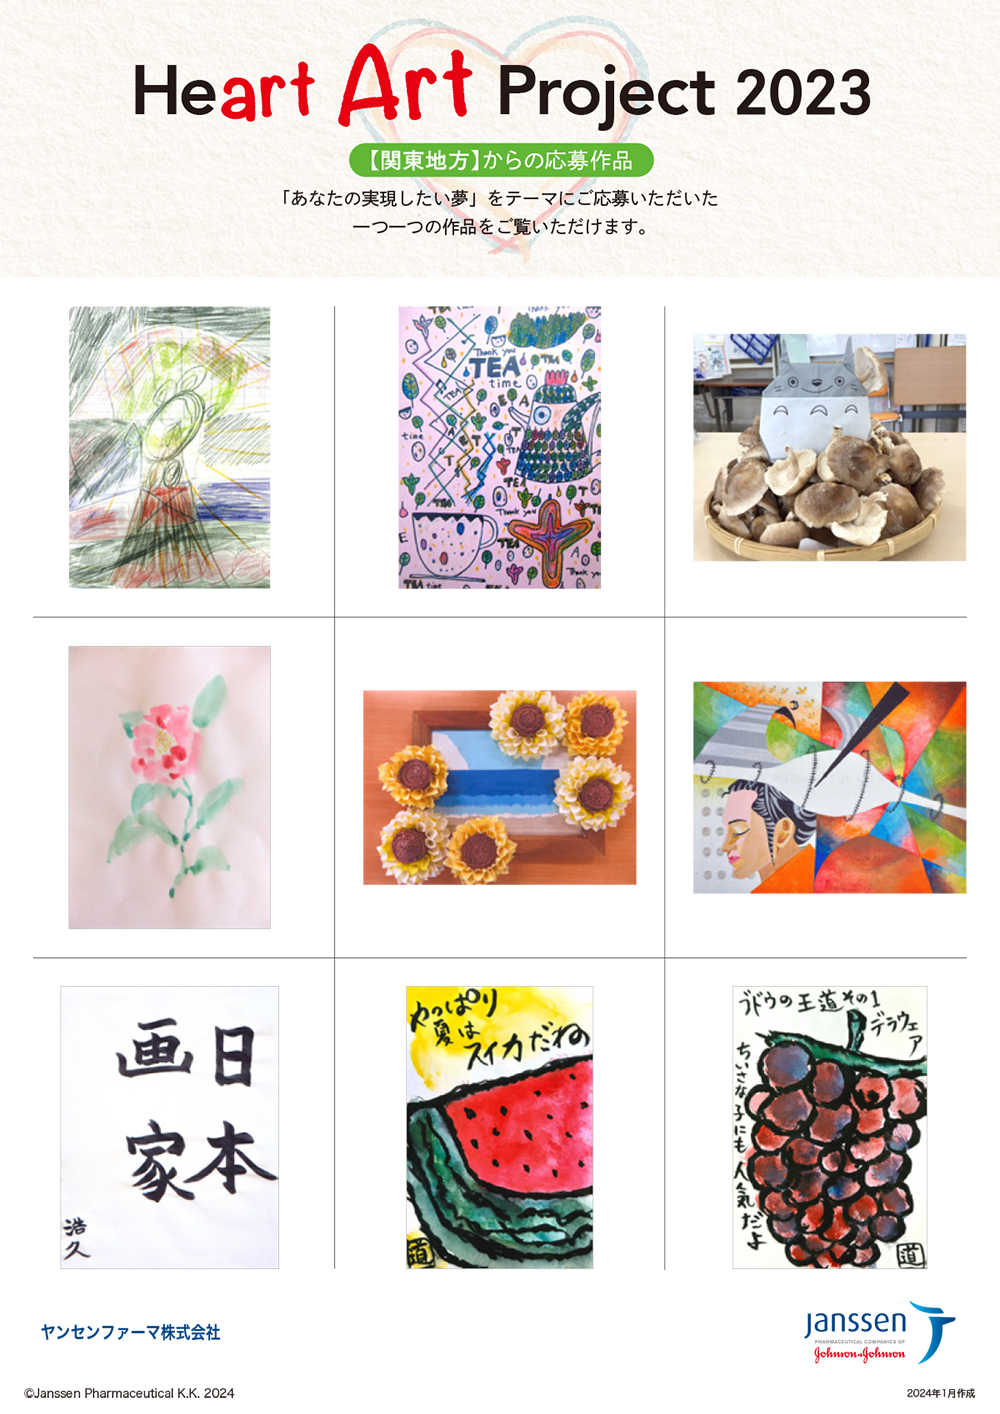 Haart Art Project 2023 関東地方からの応募作品